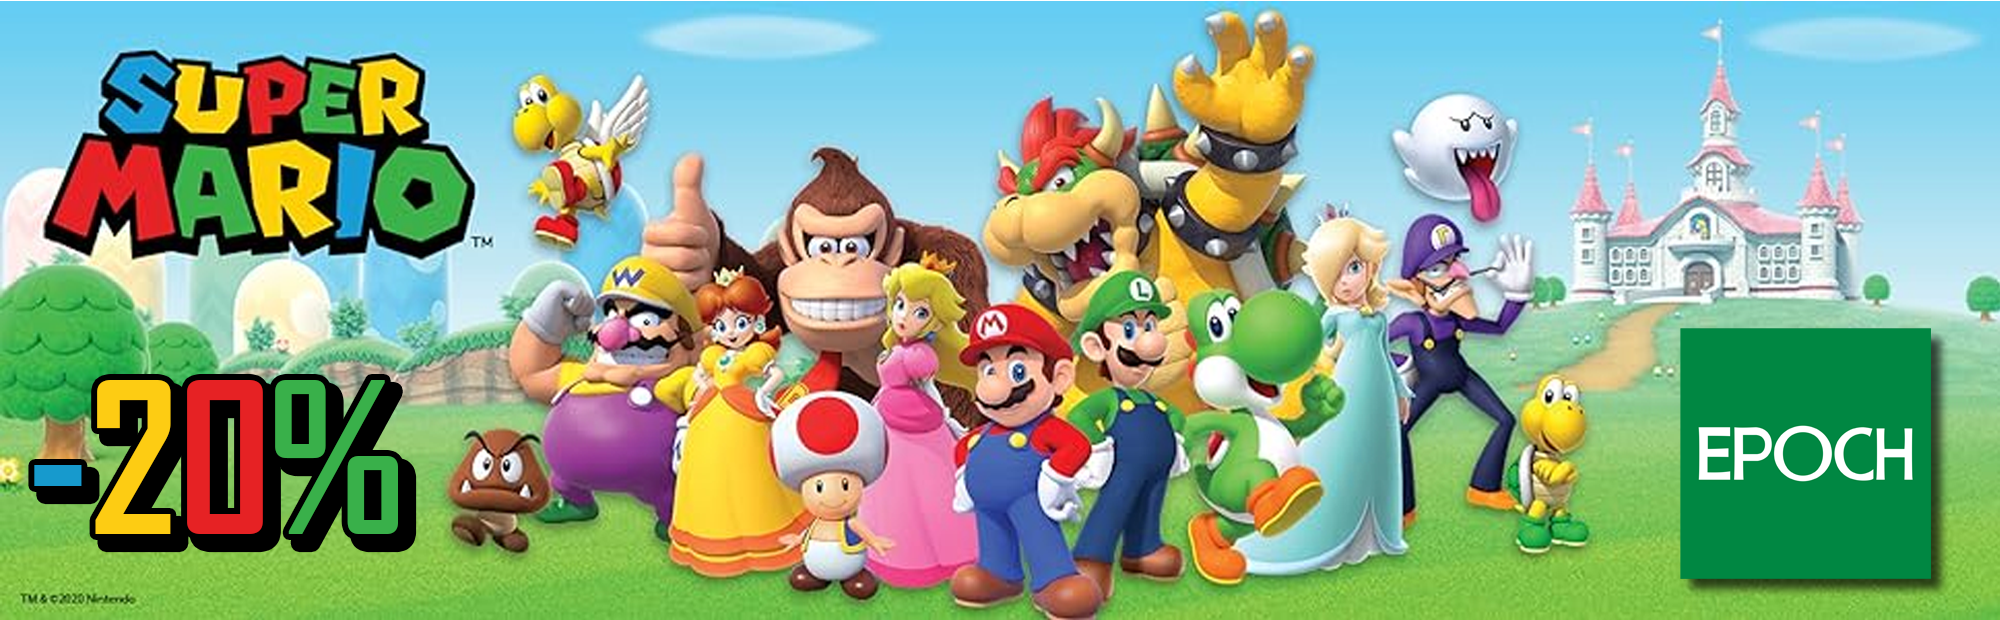 Banner Epoch - Promo Super Mario Games